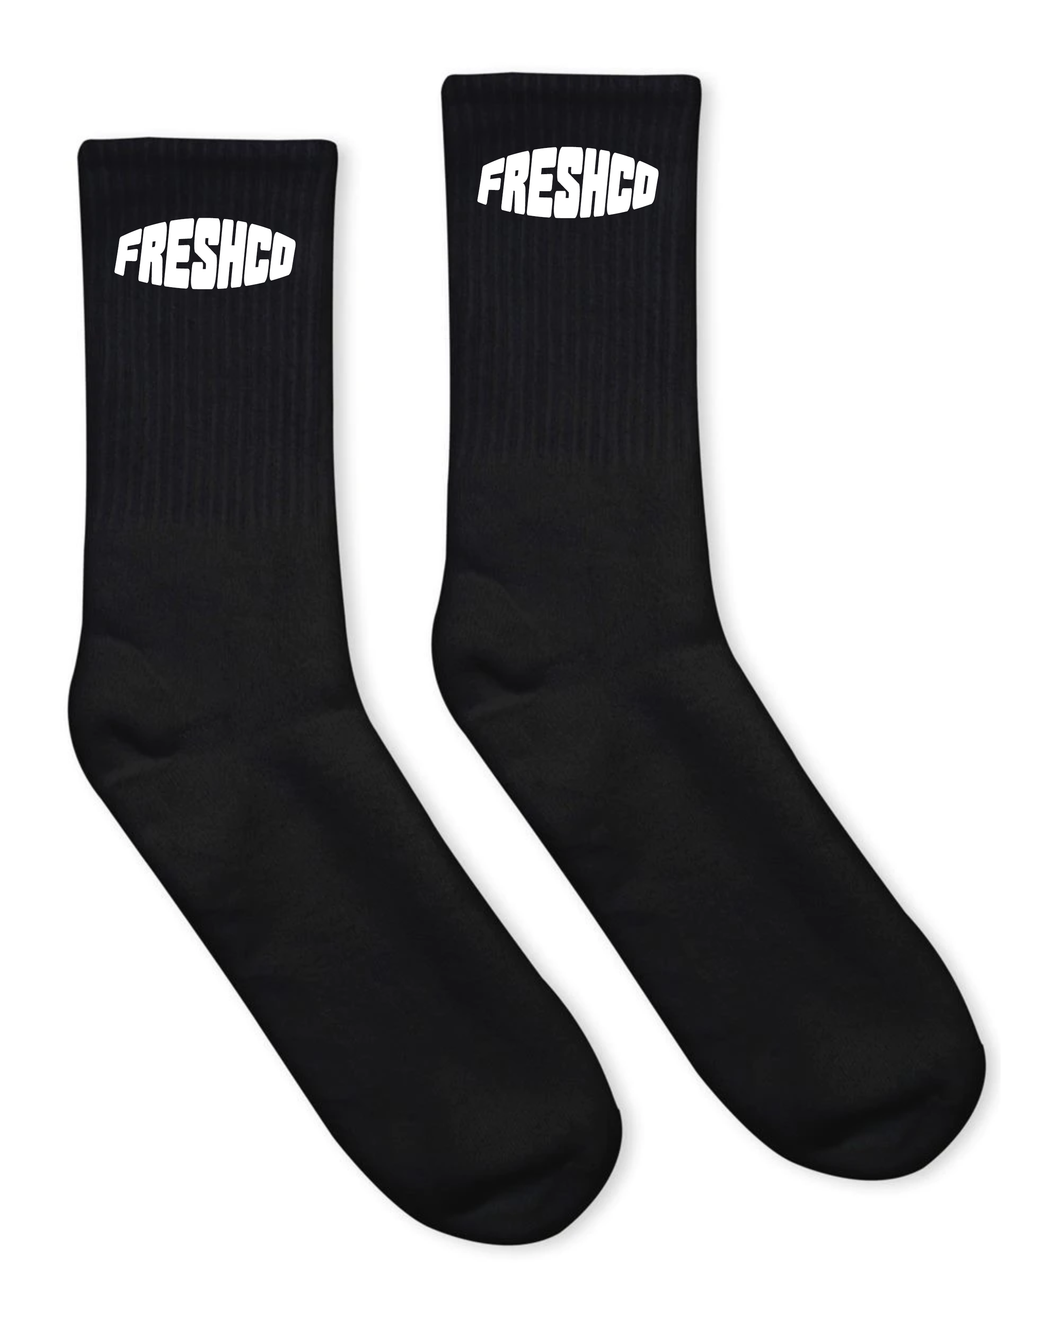 Black Premium Socks